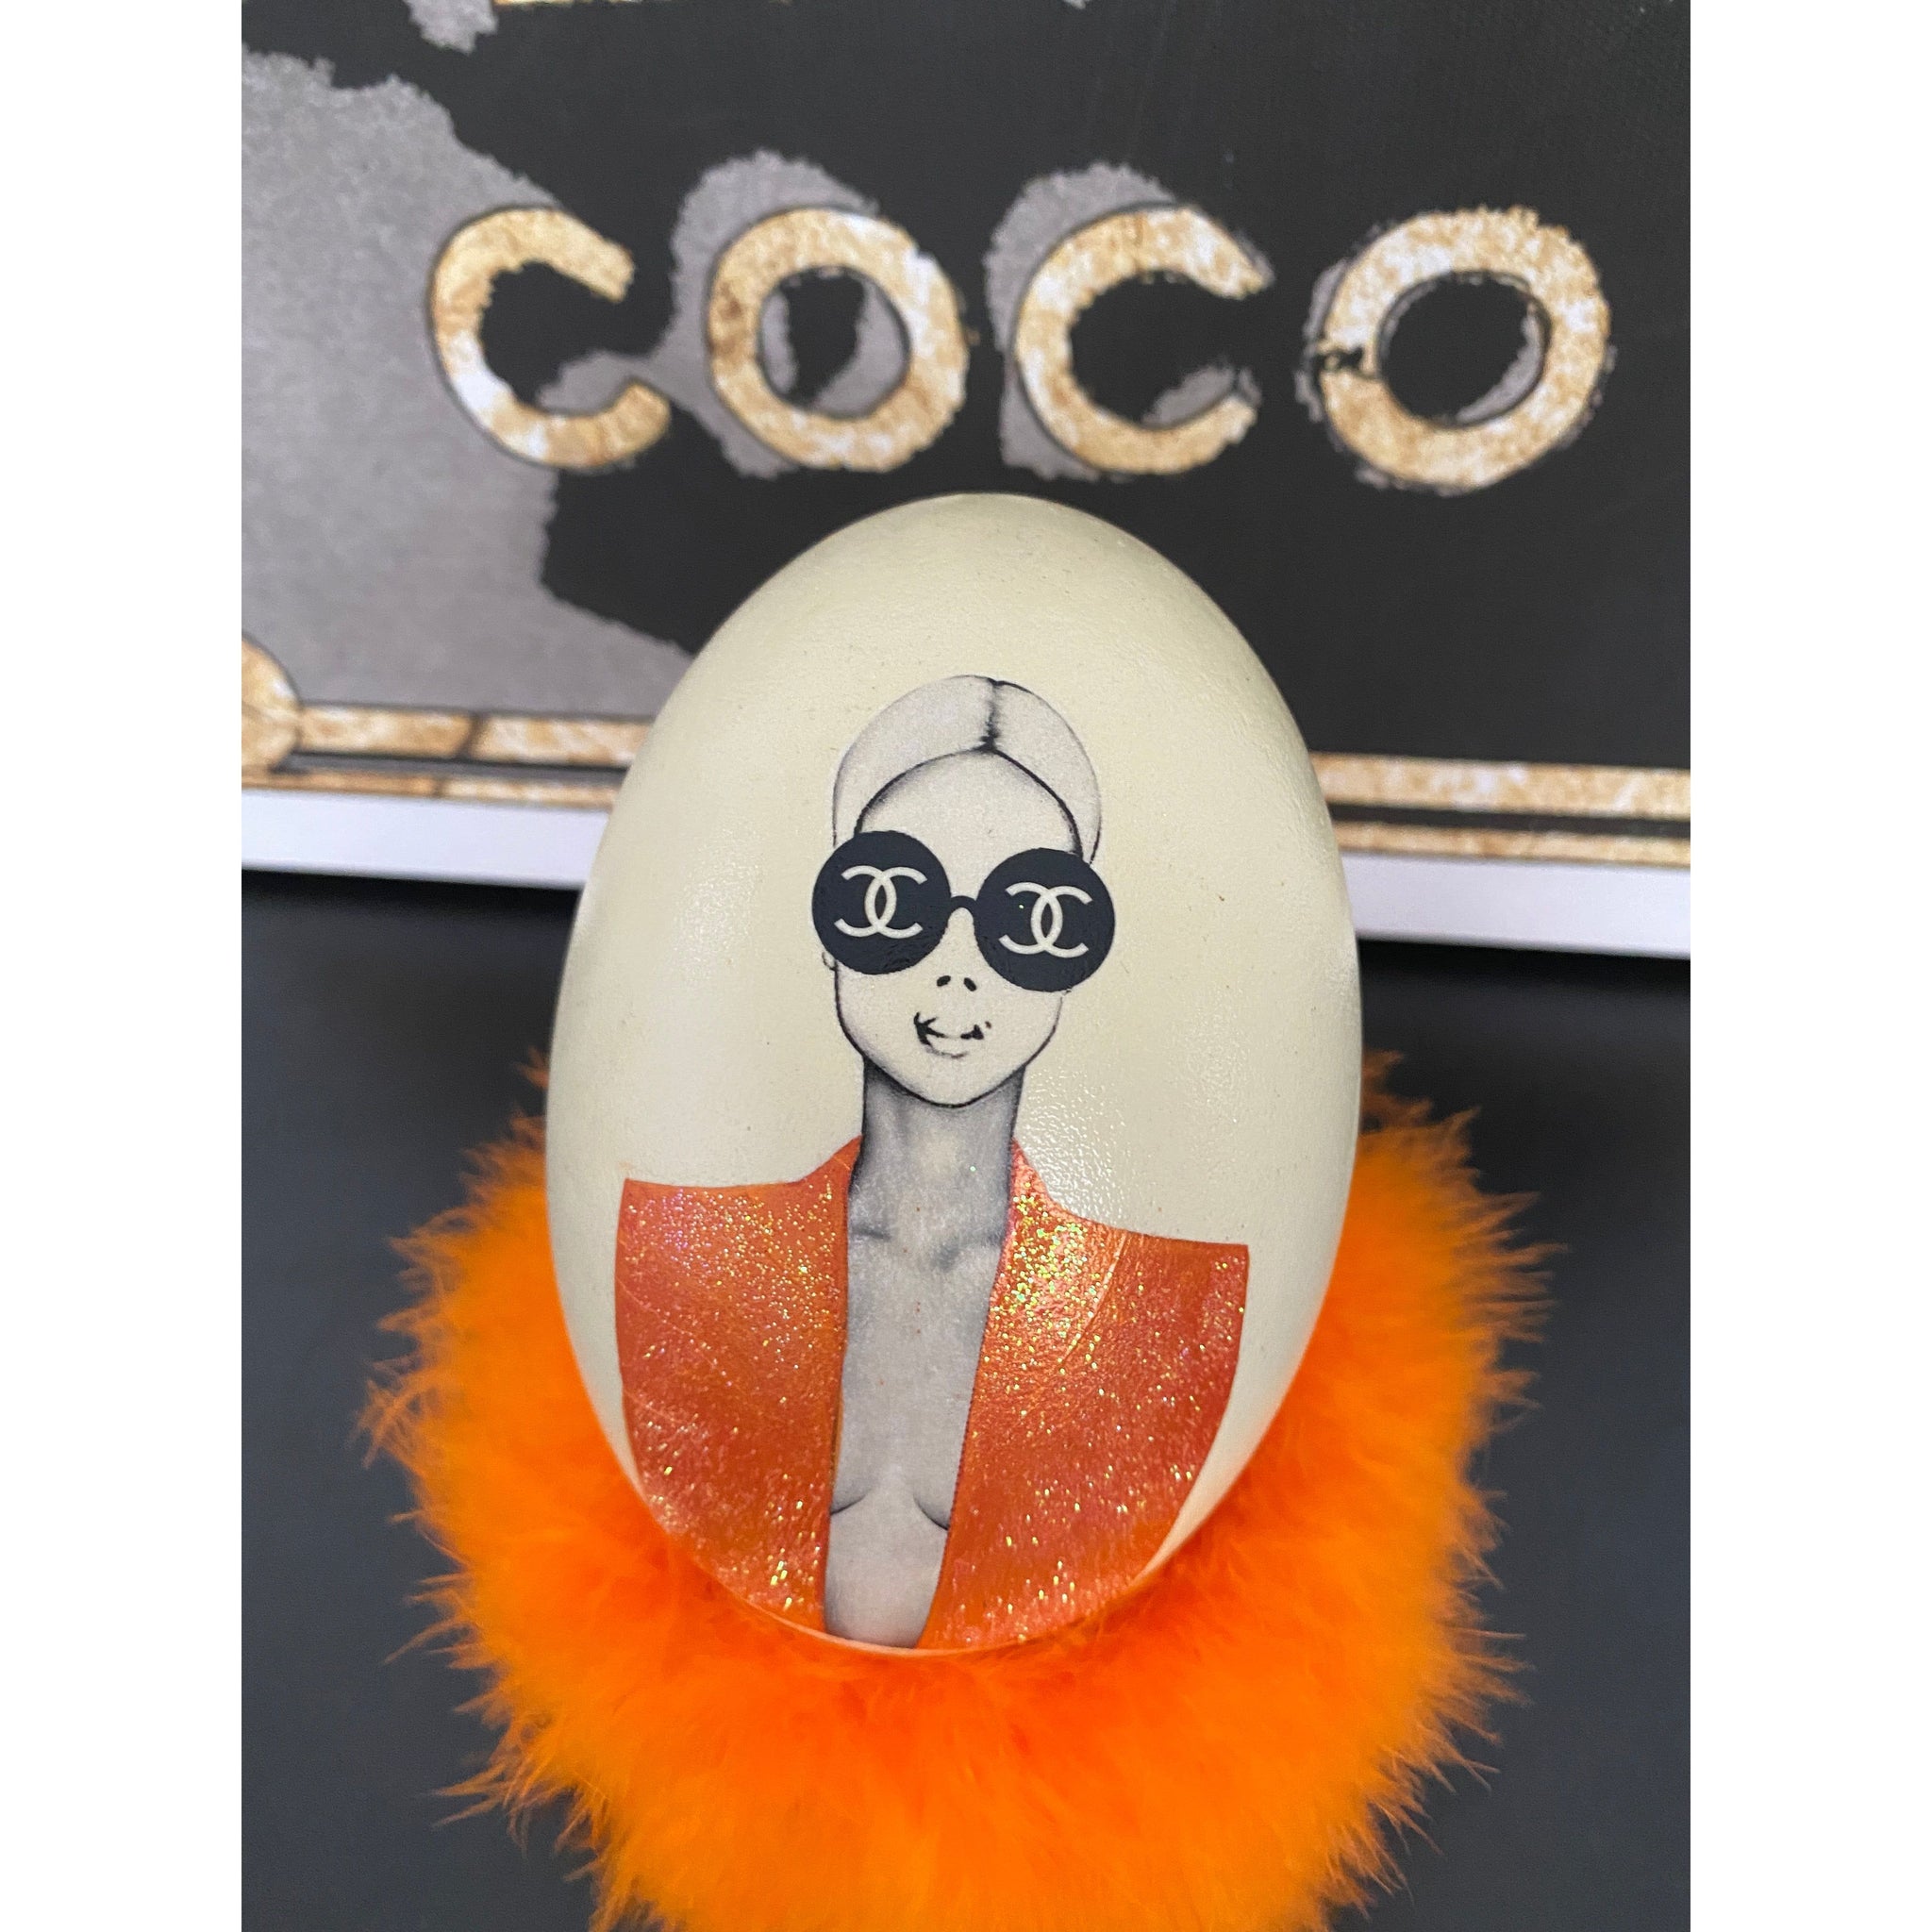 Nanduei Coco liebt Orange